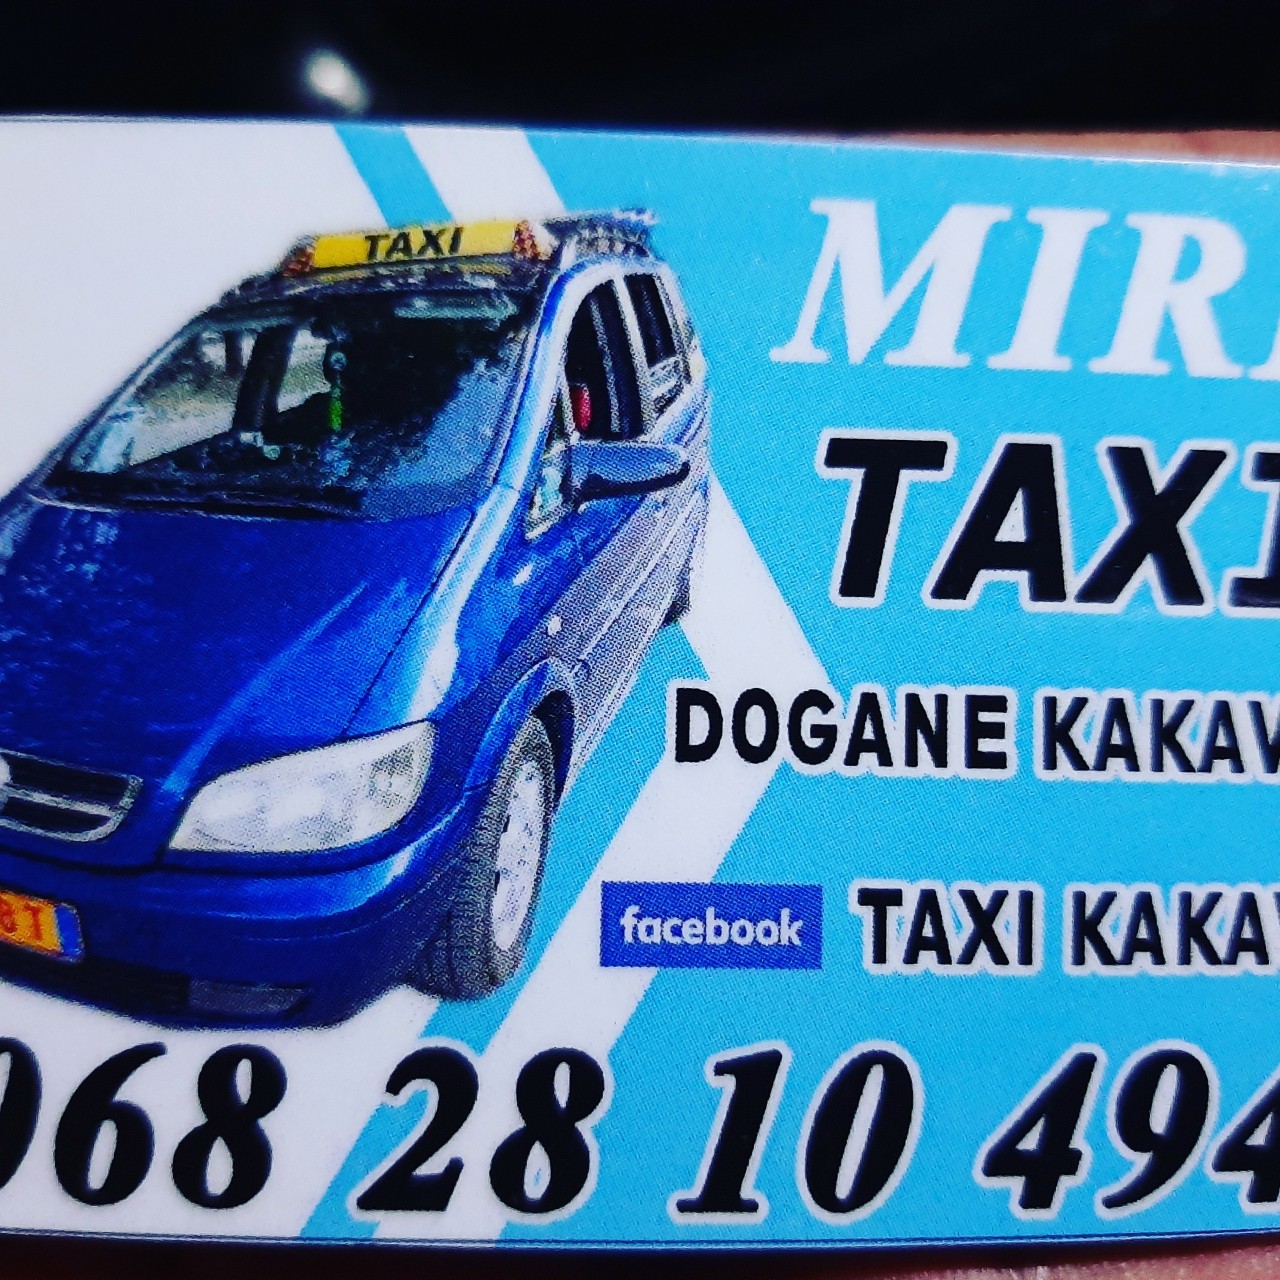 taxi taksi uber near me